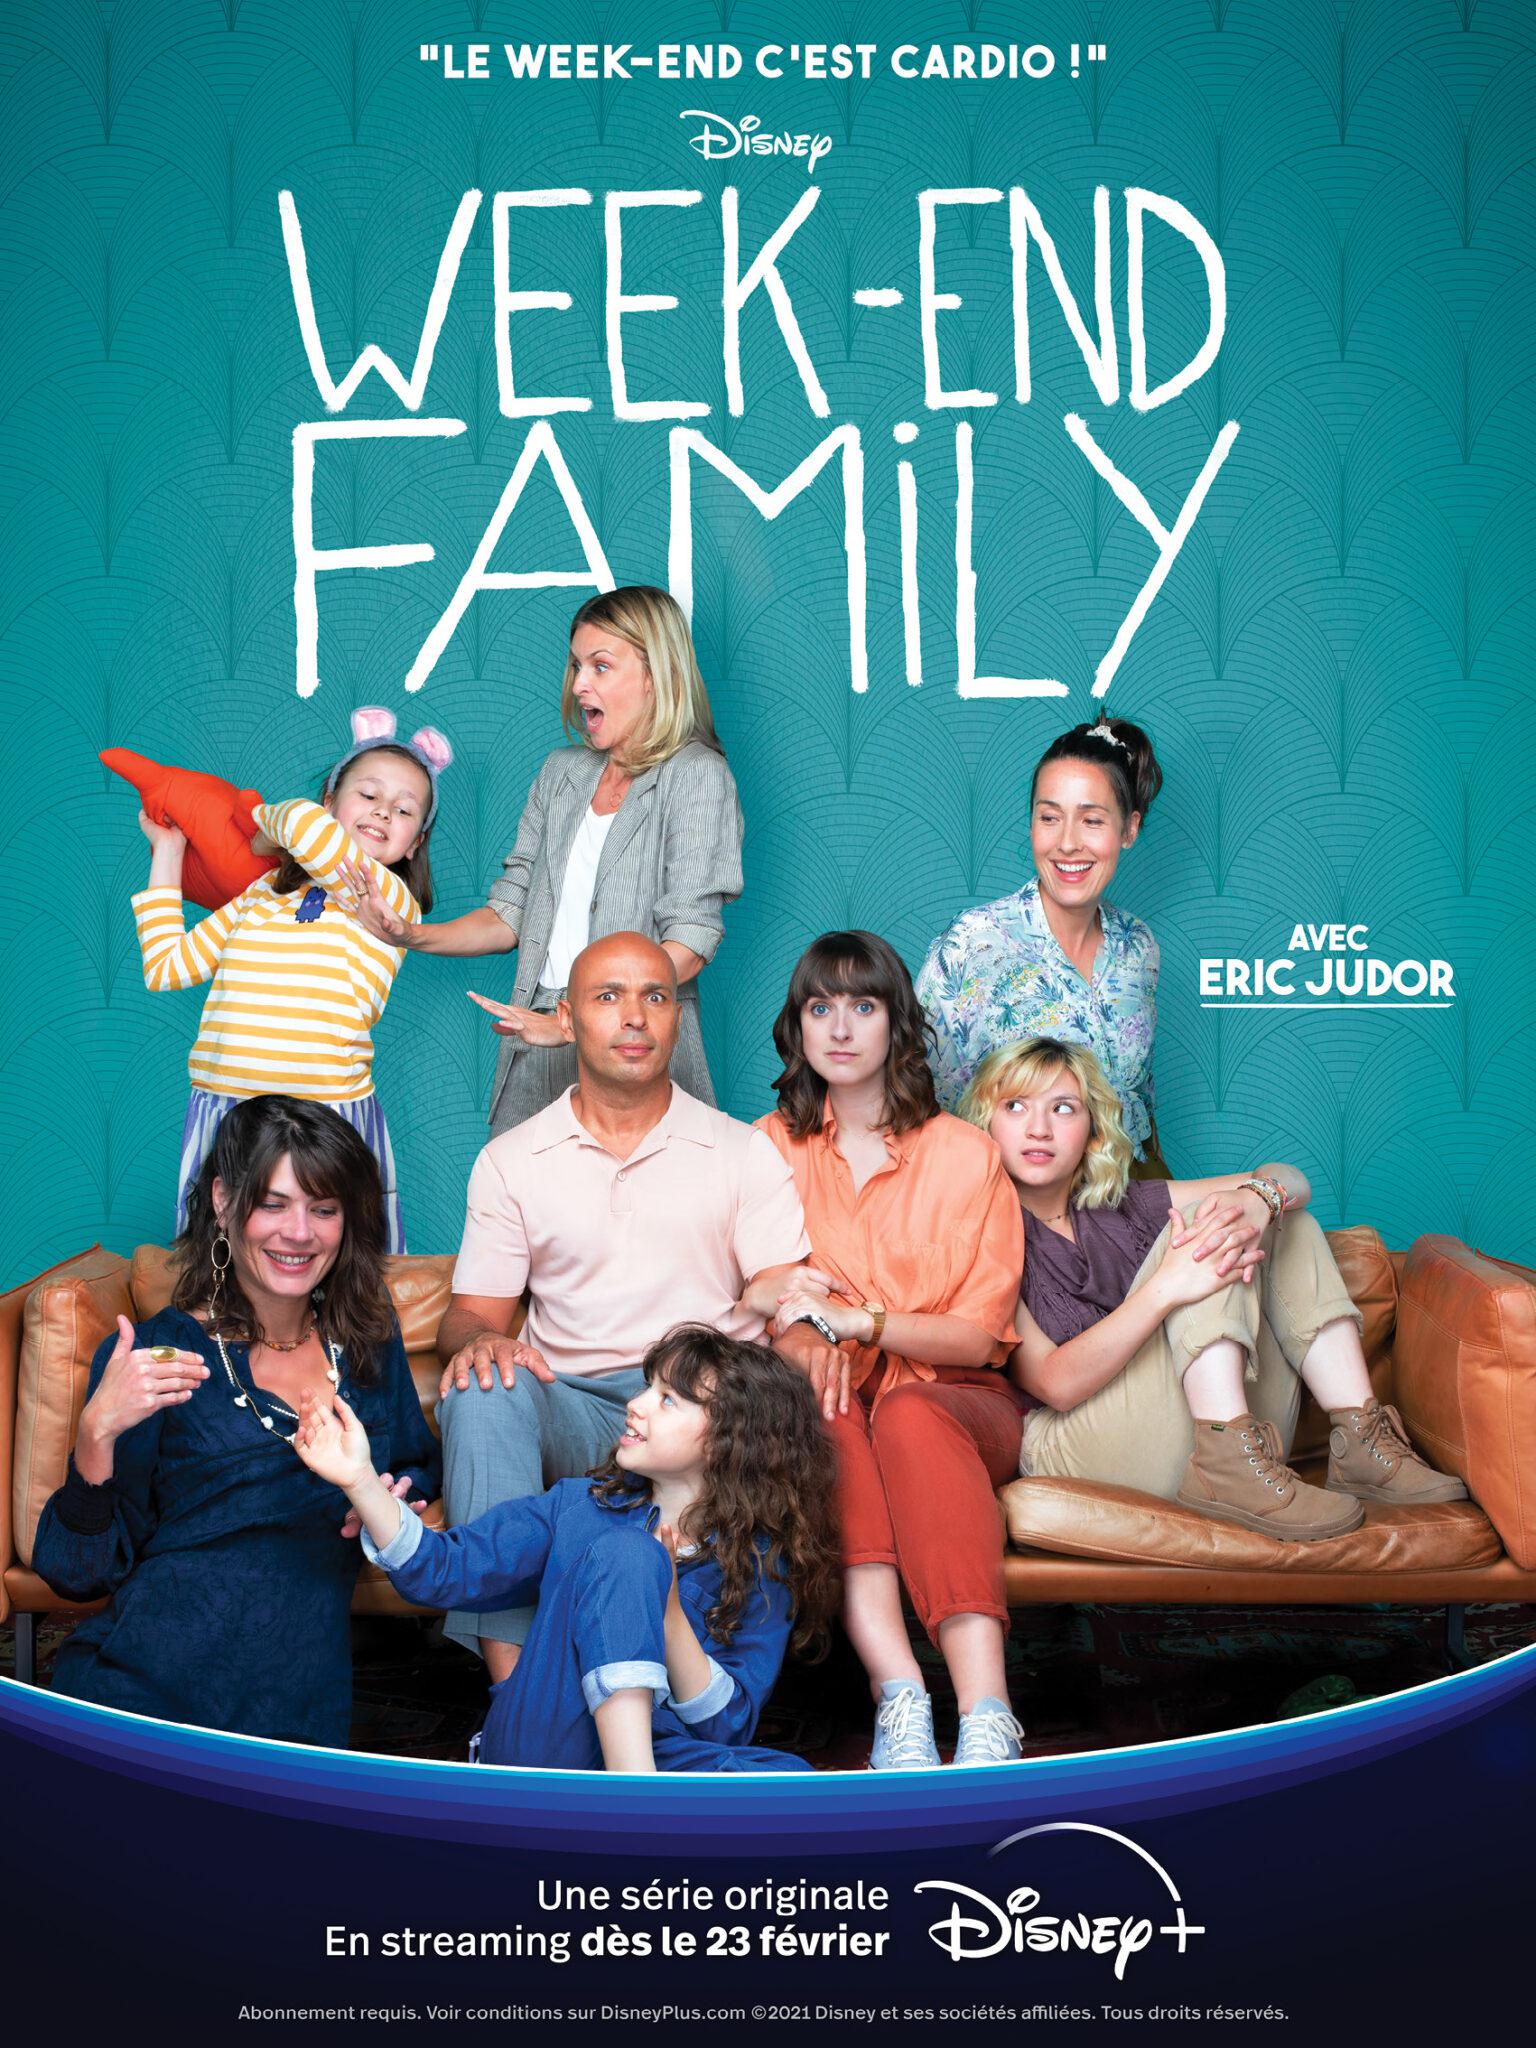 TV ratings for Weekend Family in Turkey. Disney+ TV series